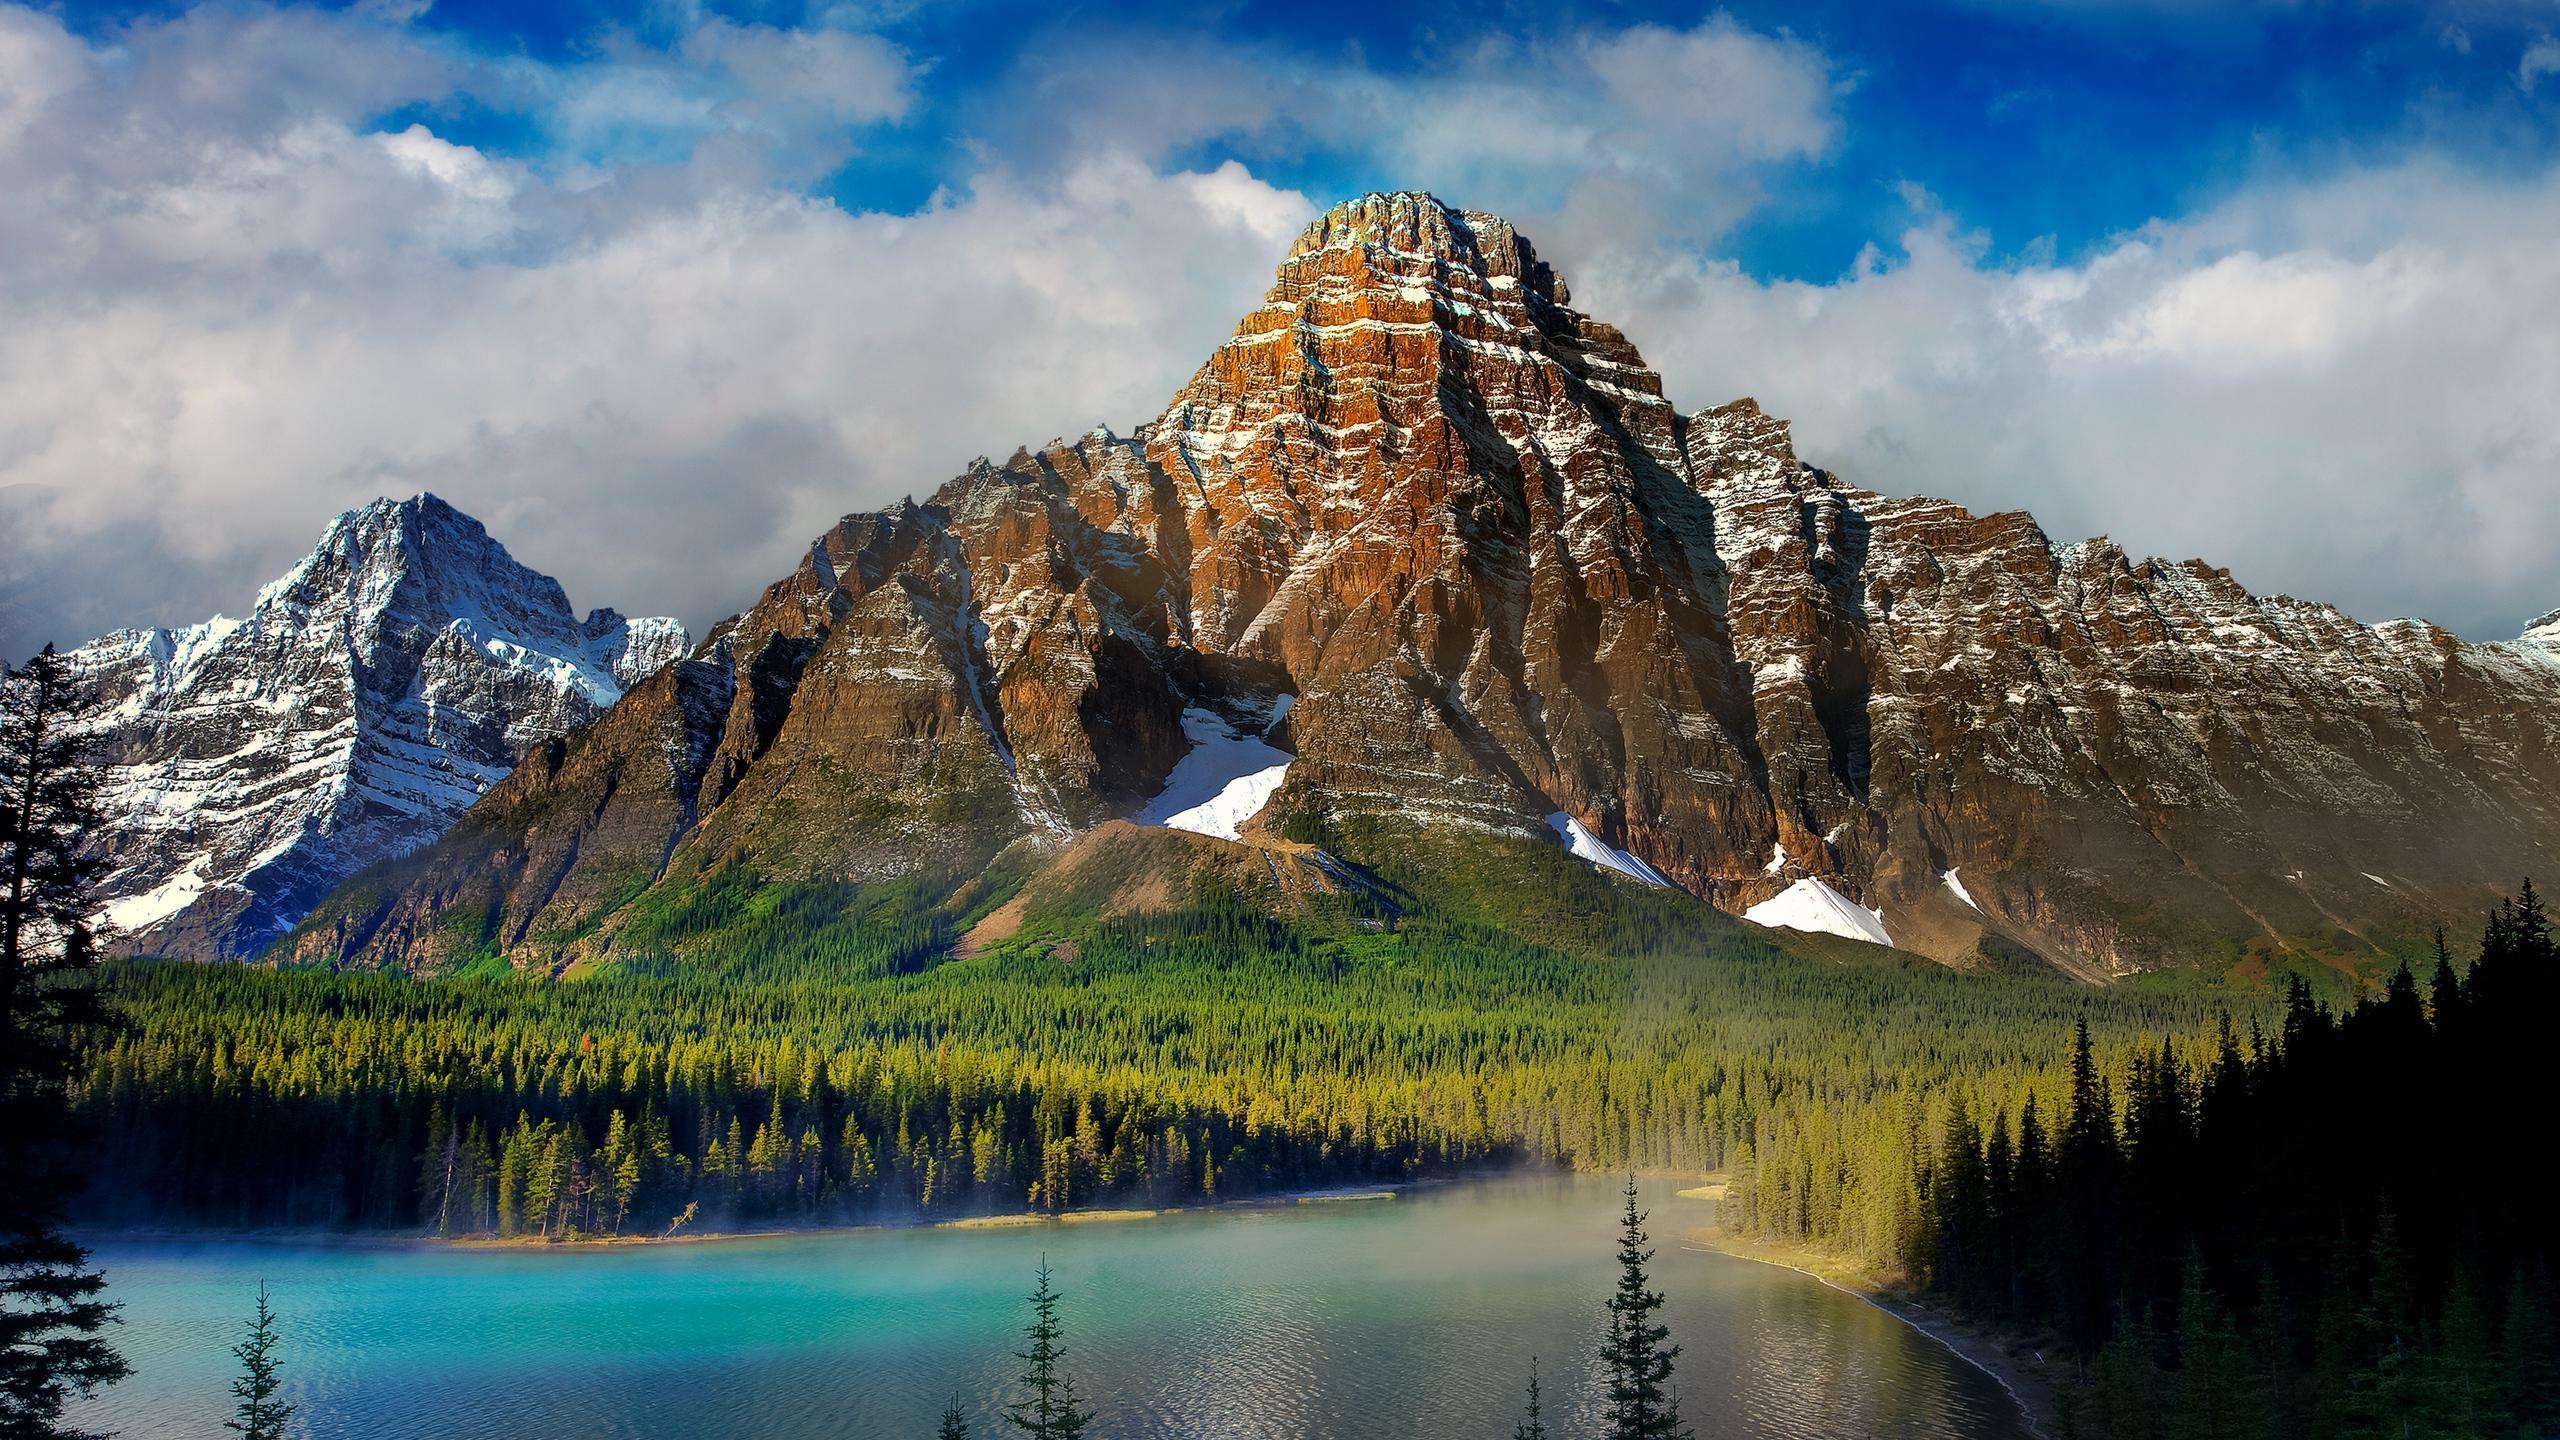 Download wallpaper 2560x1440 beautiful scenery, mountains, lake, nature widescreen 16:9 HD background